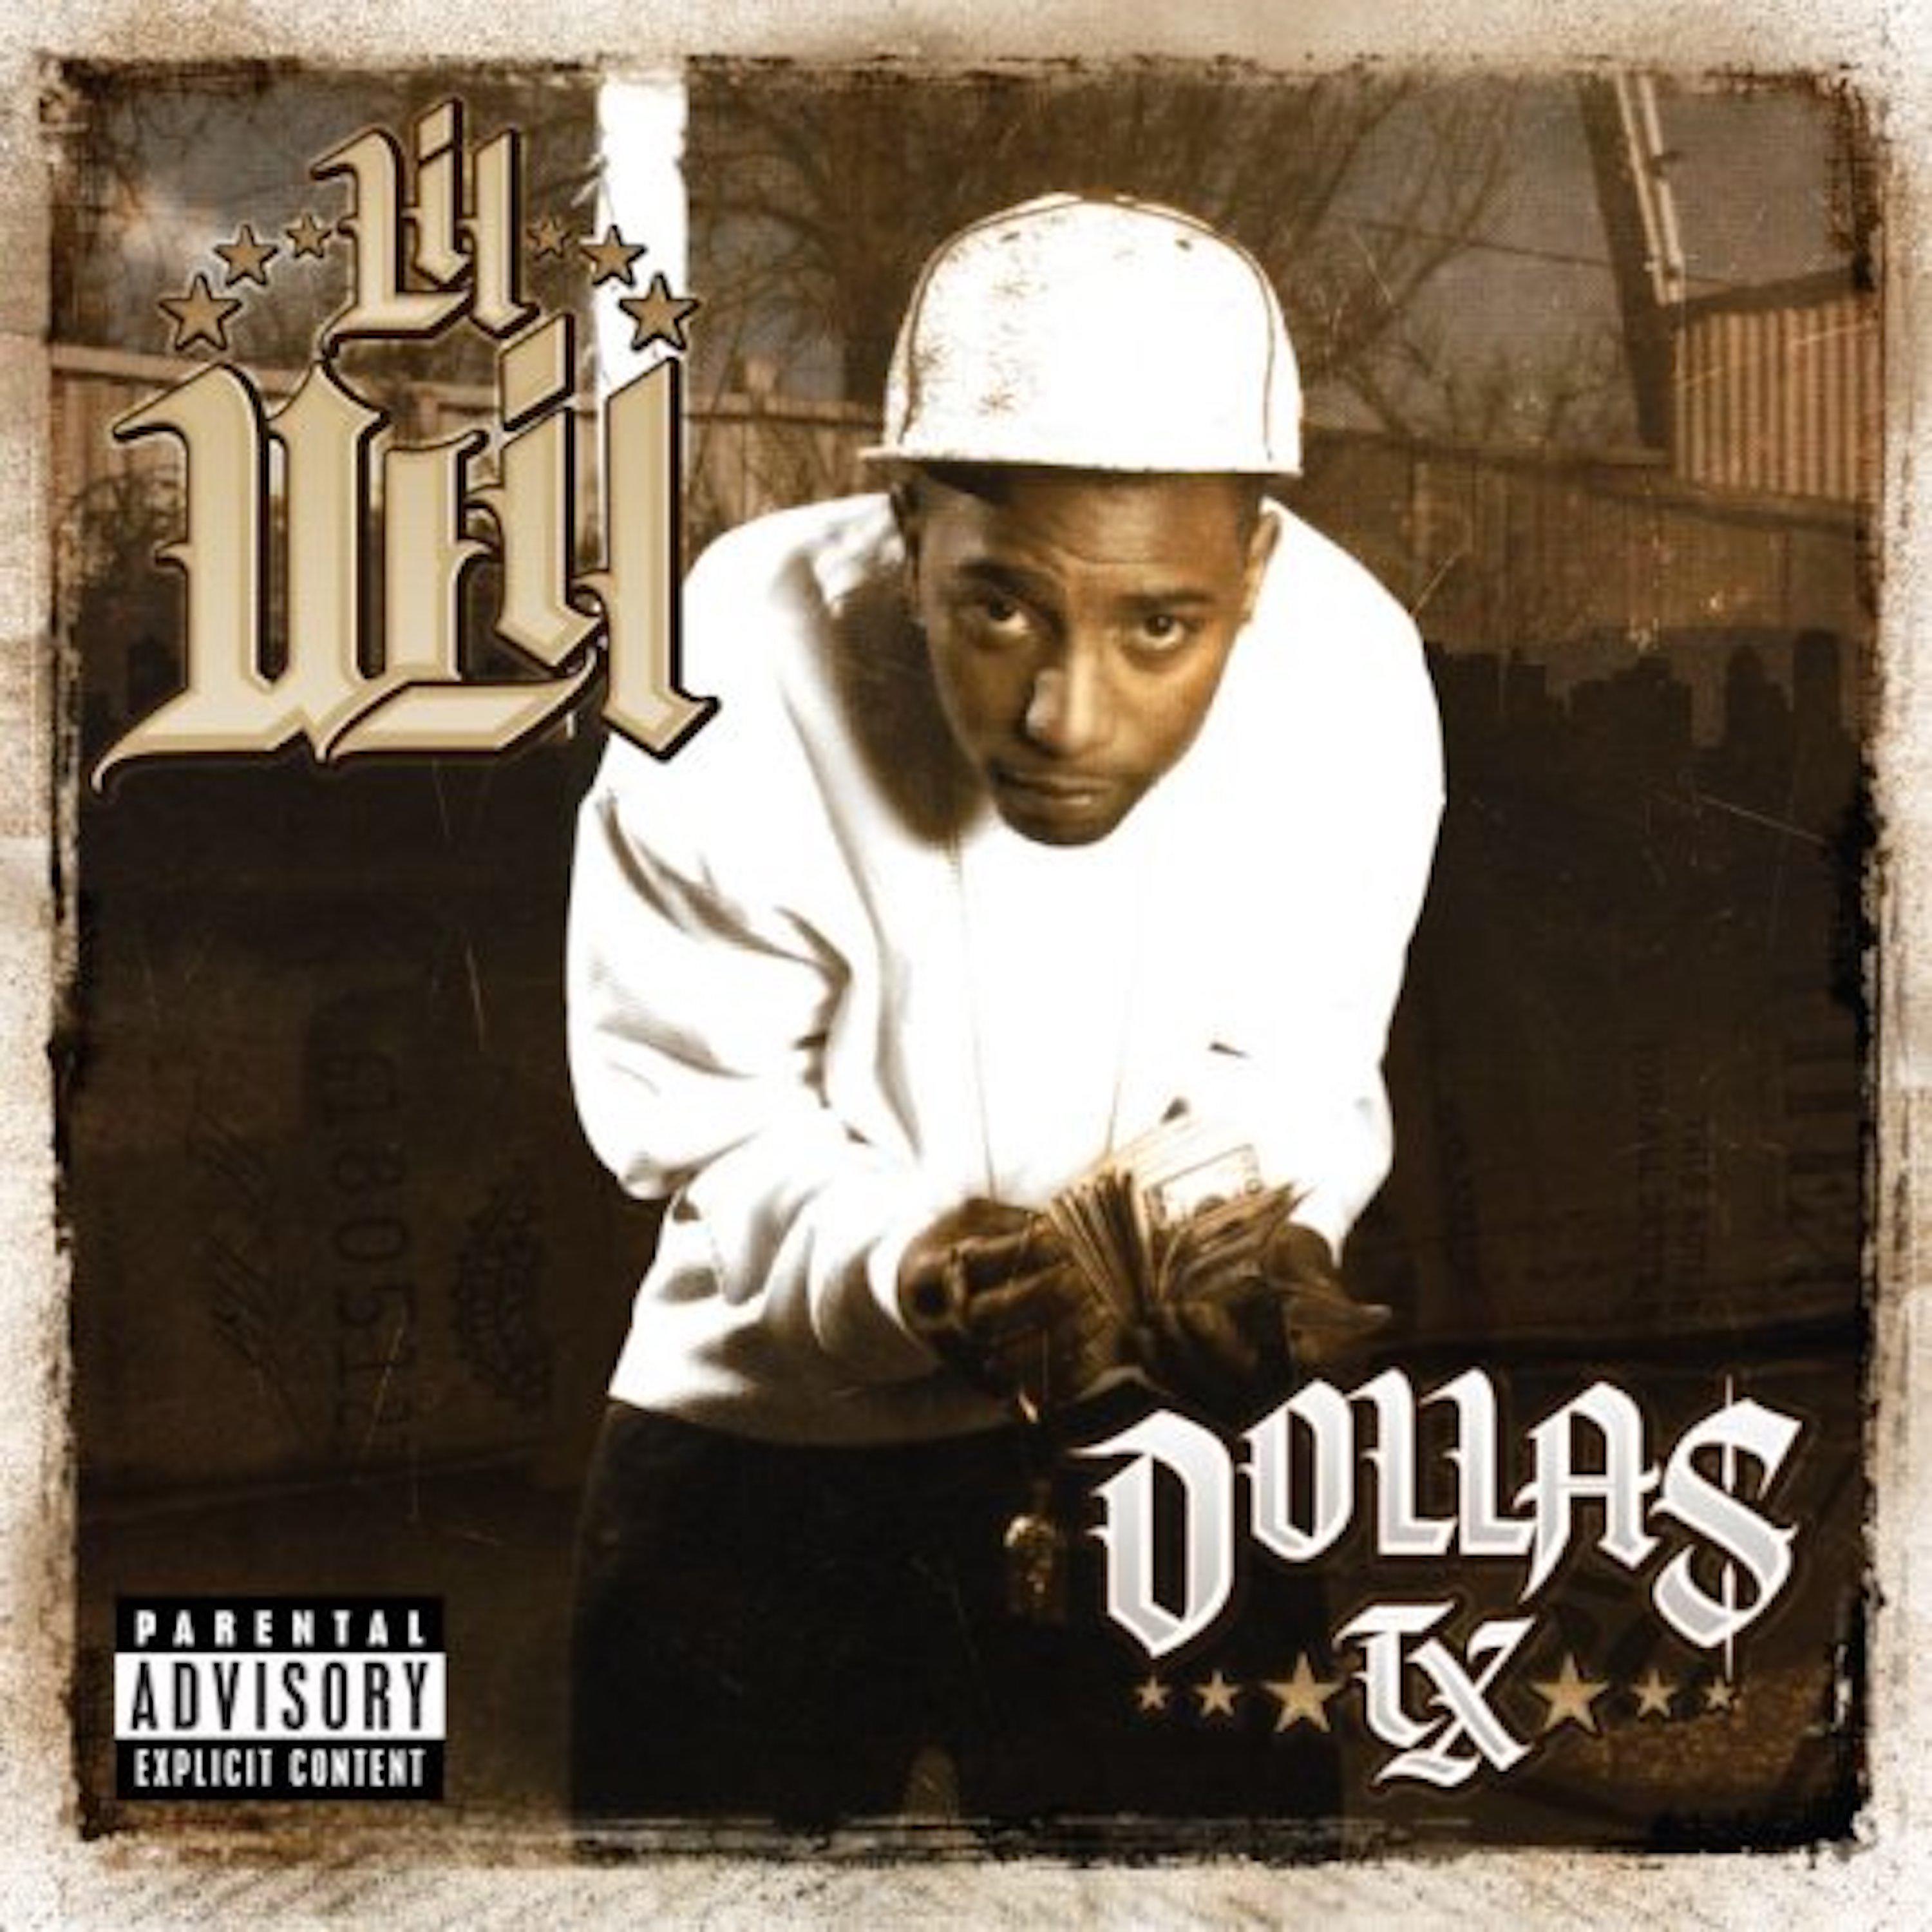 Bust It Open歌词 歌手Lil Wil-专辑Dolla$, TX-单曲《Bust It Open》LRC歌词下载